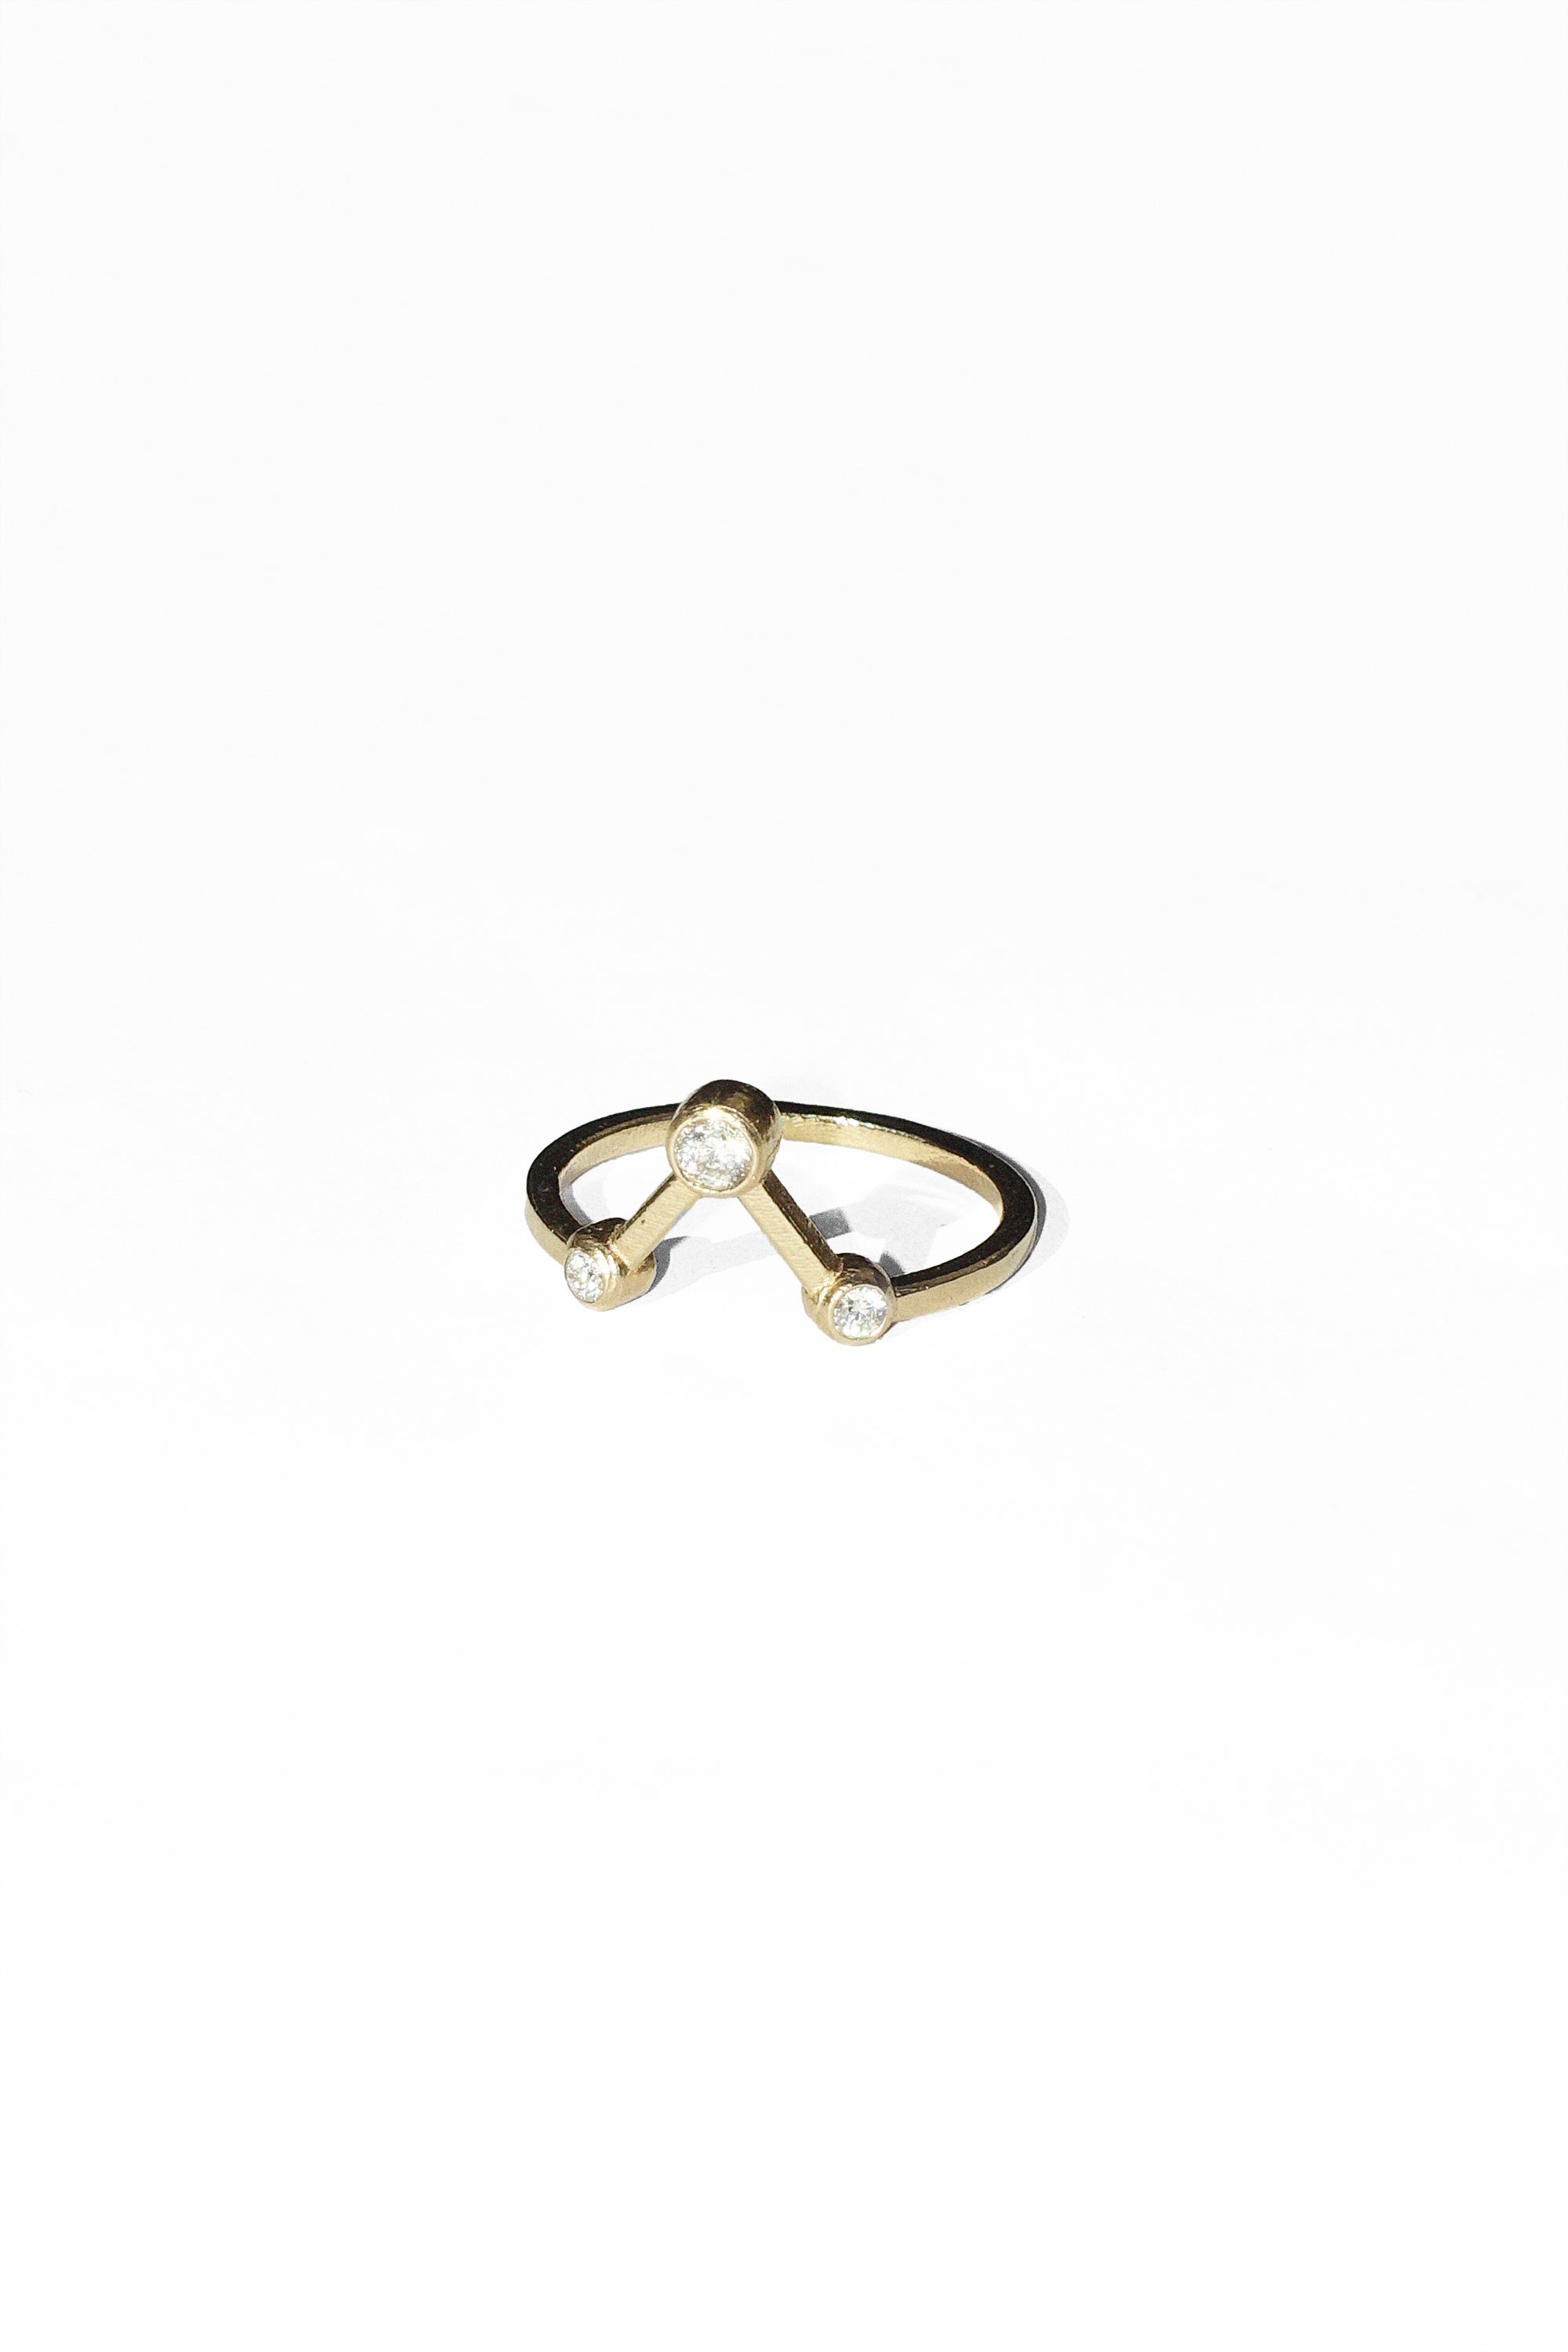 Rowen Ring in White Diamonds & 14k Gold